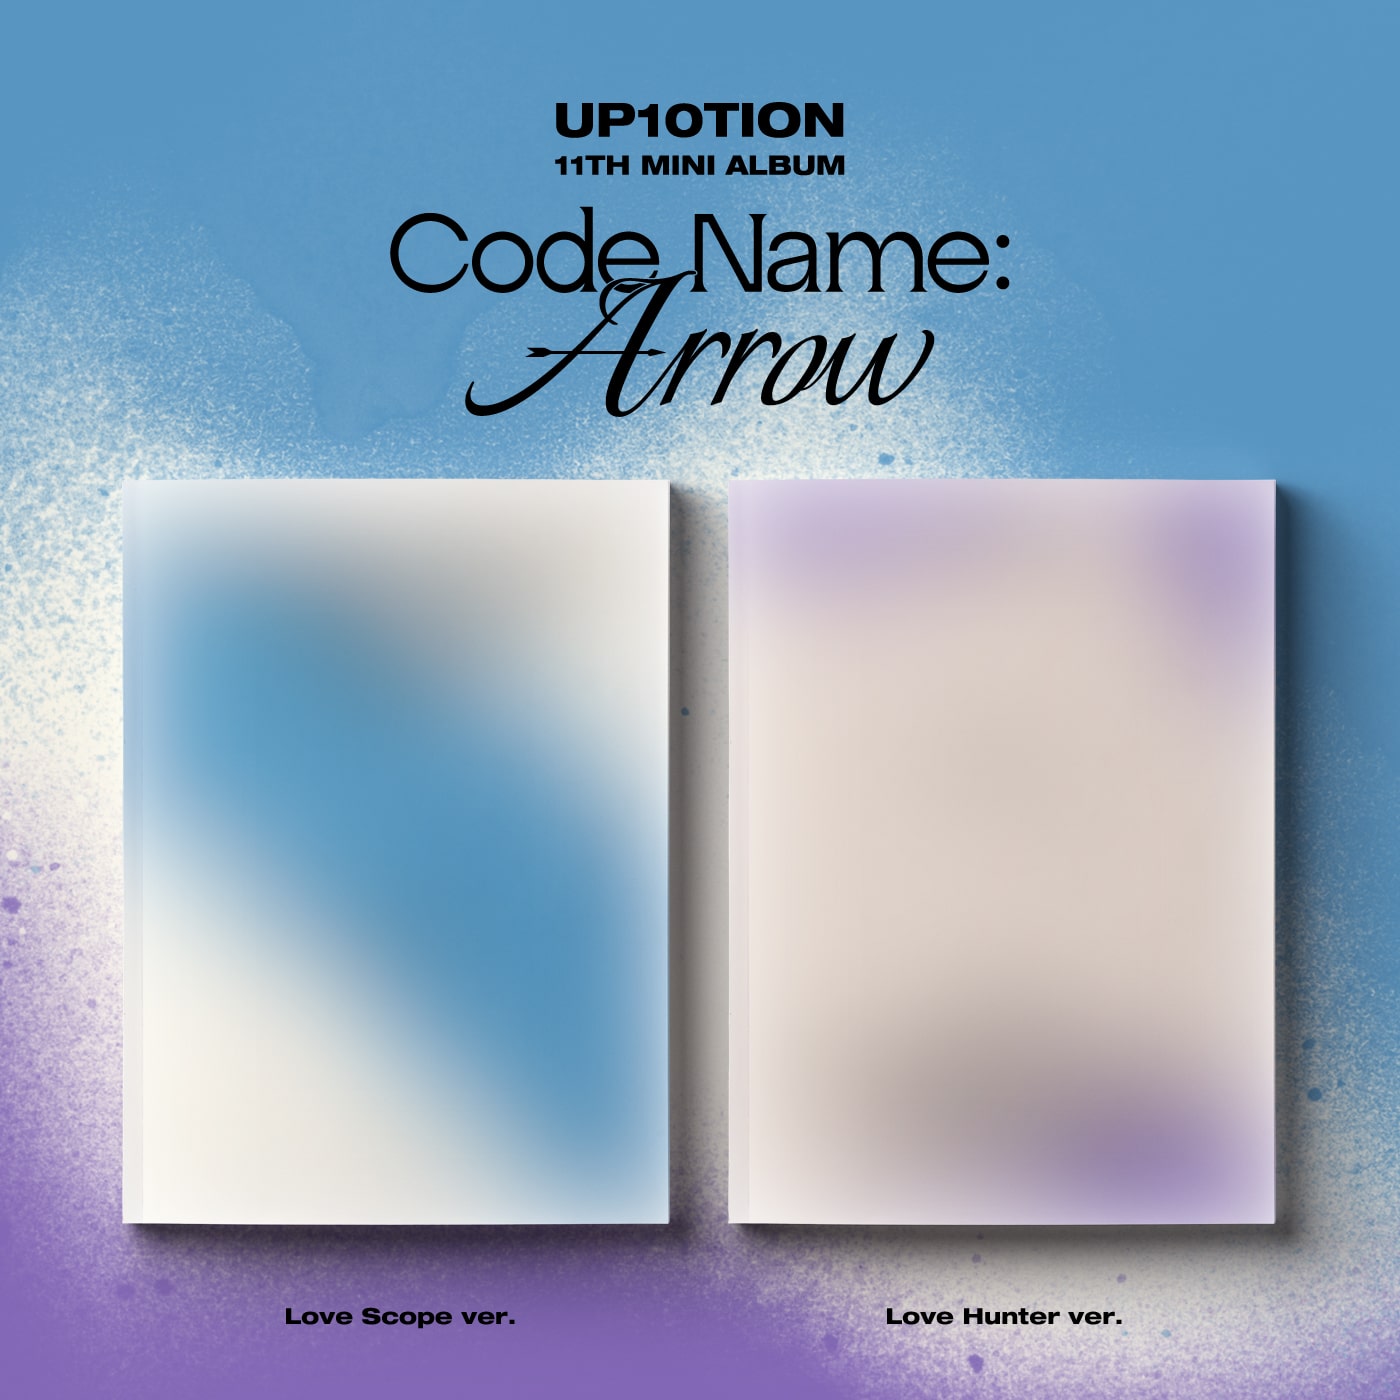 UP10TION 11th Mini Album [Code Name: Arrow] 🇰🇷